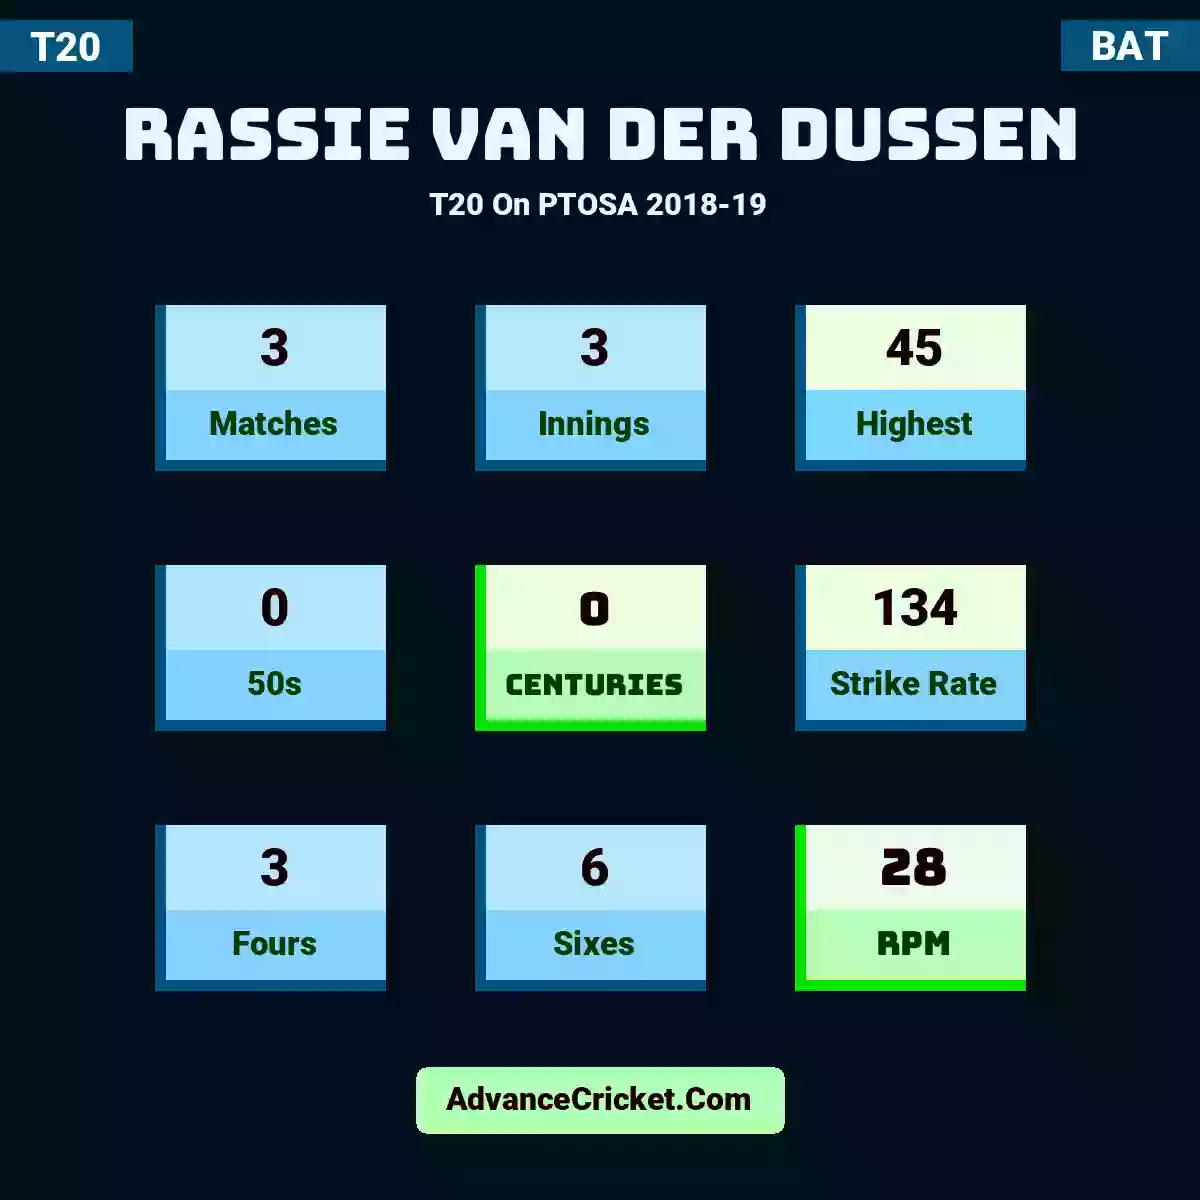 Rassie van der Dussen T20  On PTOSA 2018-19, Rassie van der Dussen played 3 matches, scored 45 runs as highest, 0 half-centuries, and 0 centuries, with a strike rate of 134. R.Dussen hit 3 fours and 6 sixes, with an RPM of 28.